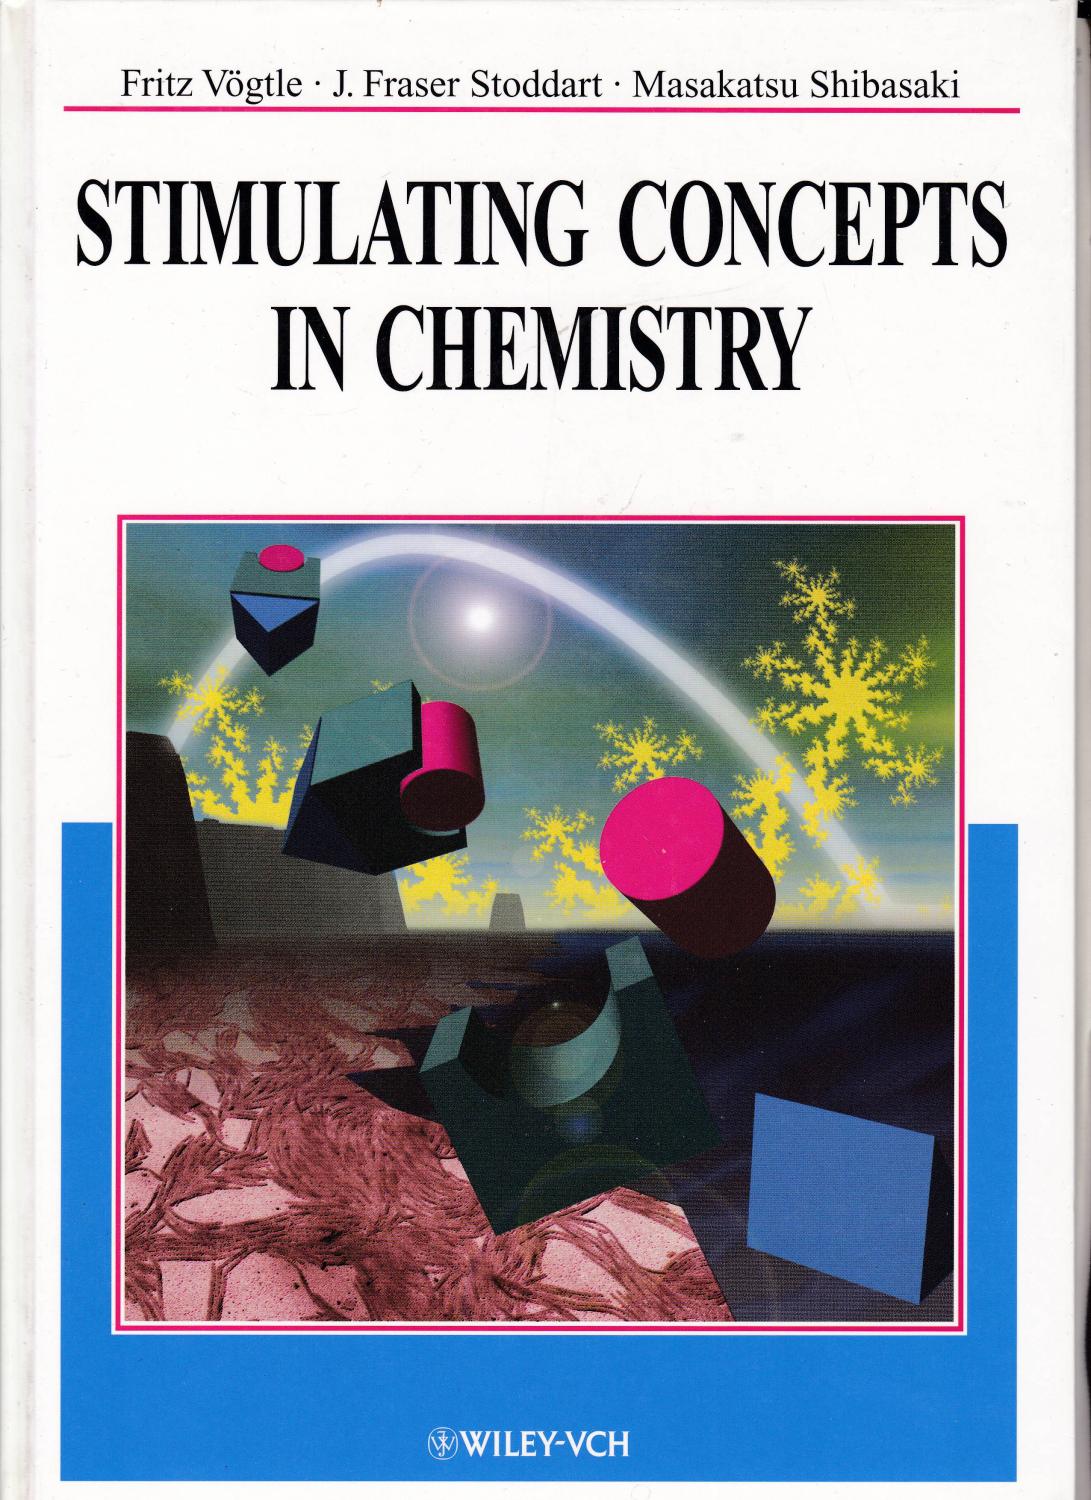 Stimulating concepts in Chemistry. - Vögtle, Fritz / Stoddart, J. Fraser / Shibasaki, Masakatsu (Editors)